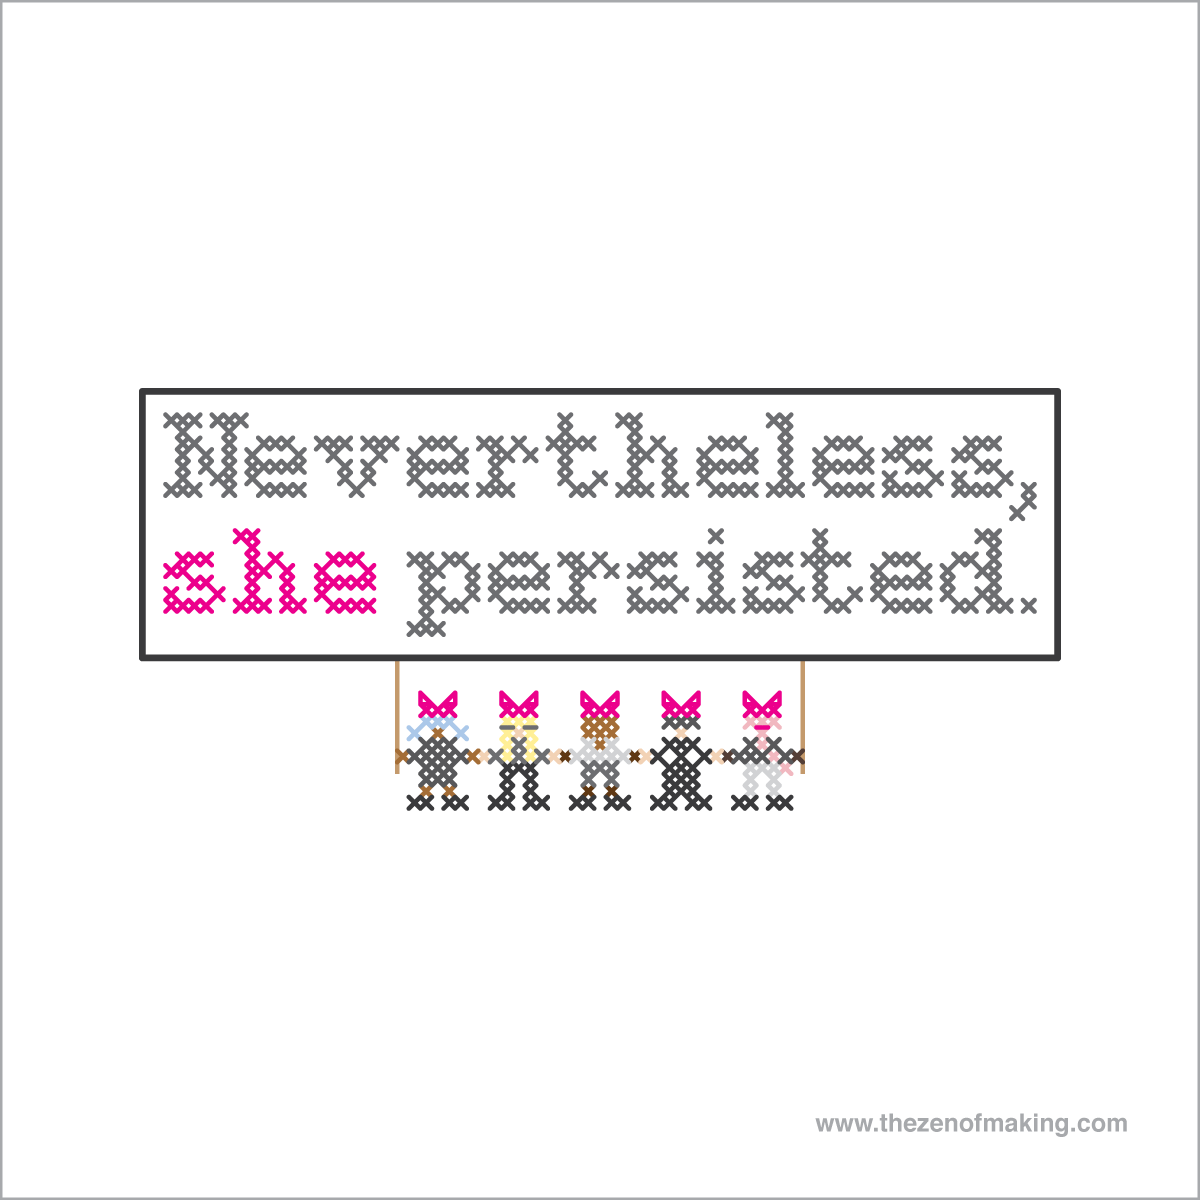 Pattern: Nevertheless, She Persisted Cross-Stitch Sampler